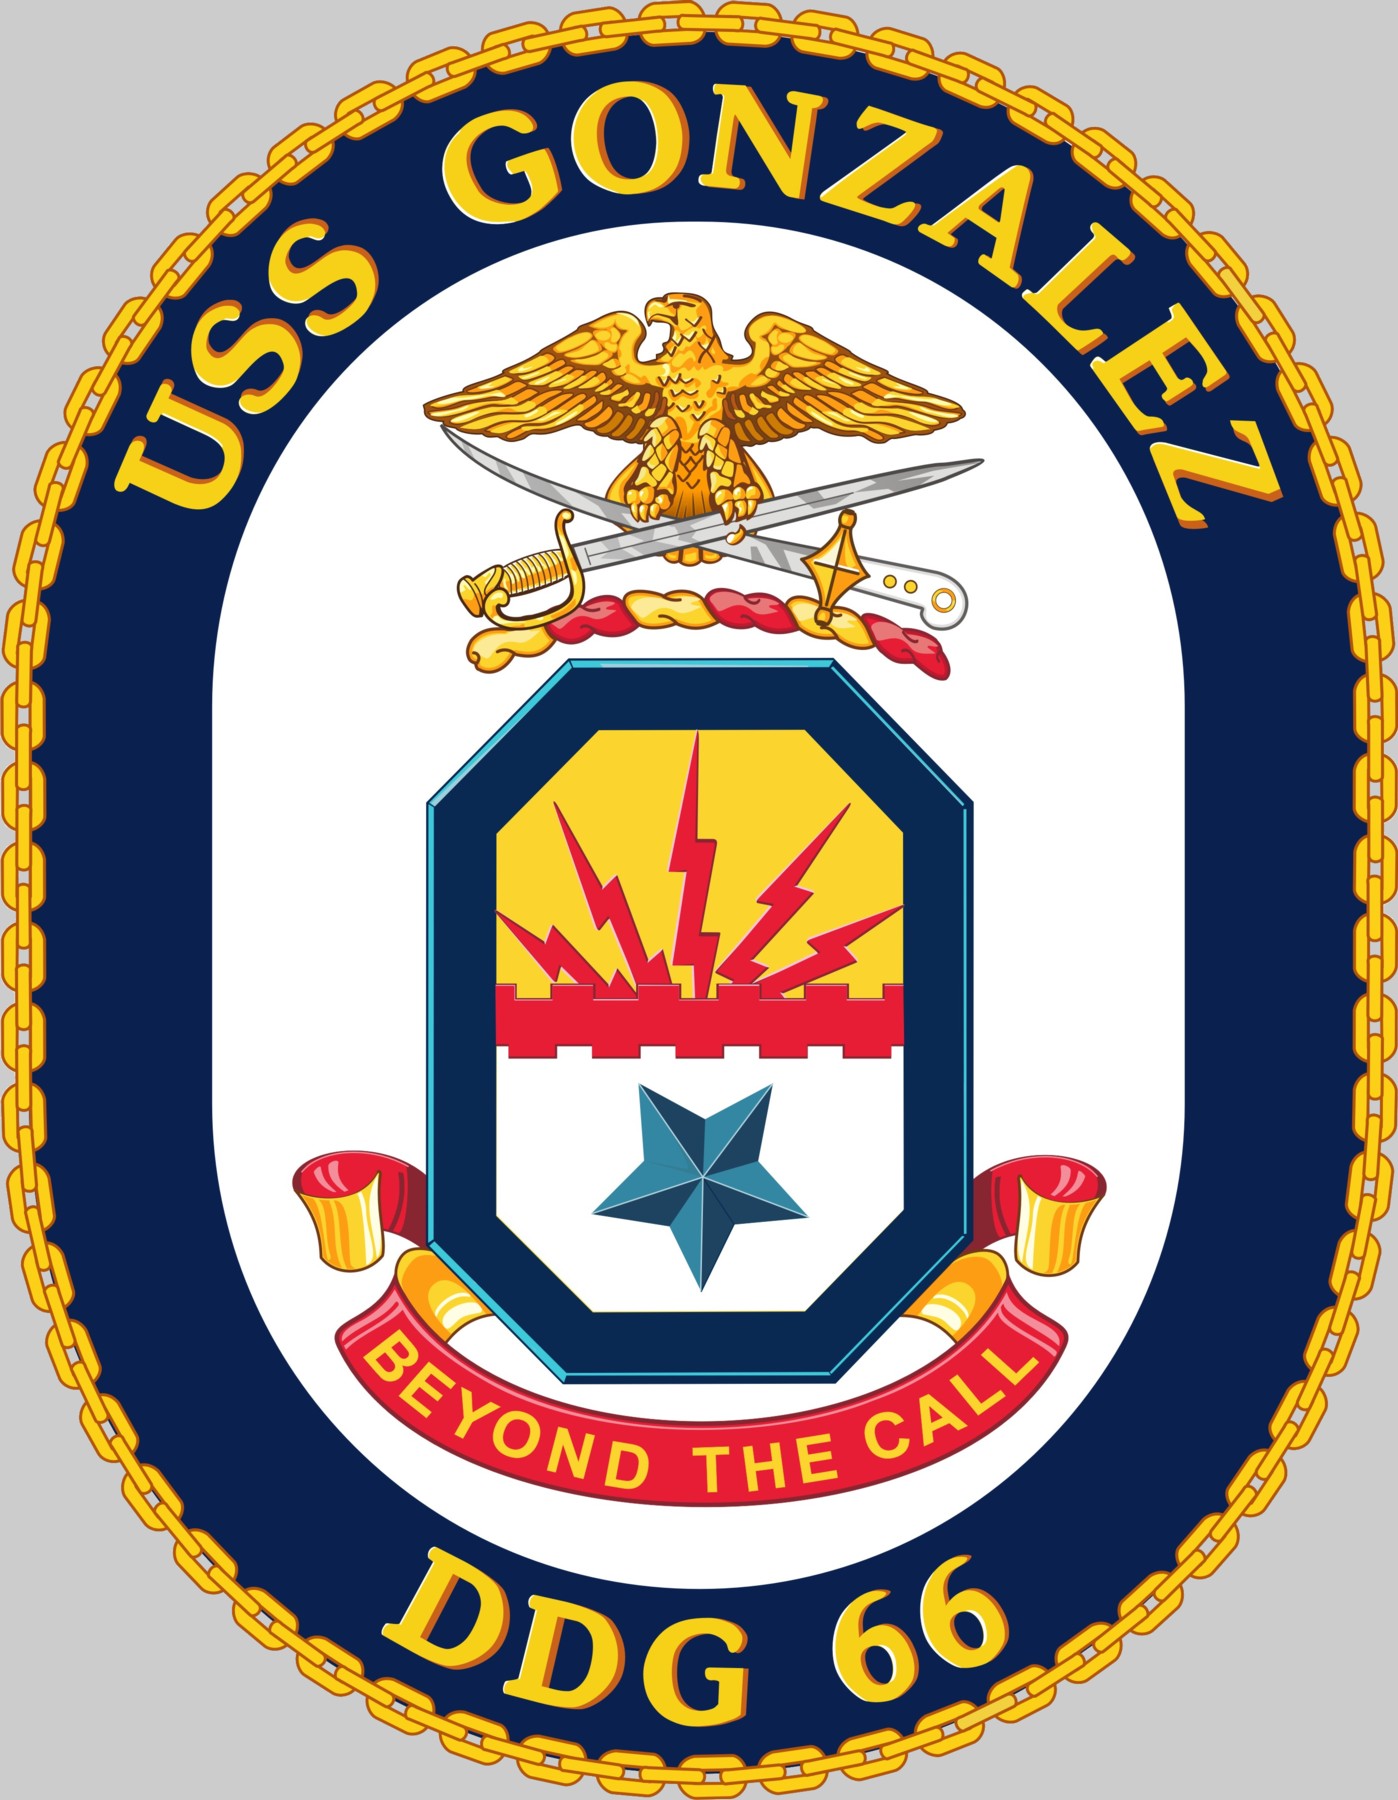 ddg-66 uss gonzalez insignia crest patch badge destroyer us navy 04c